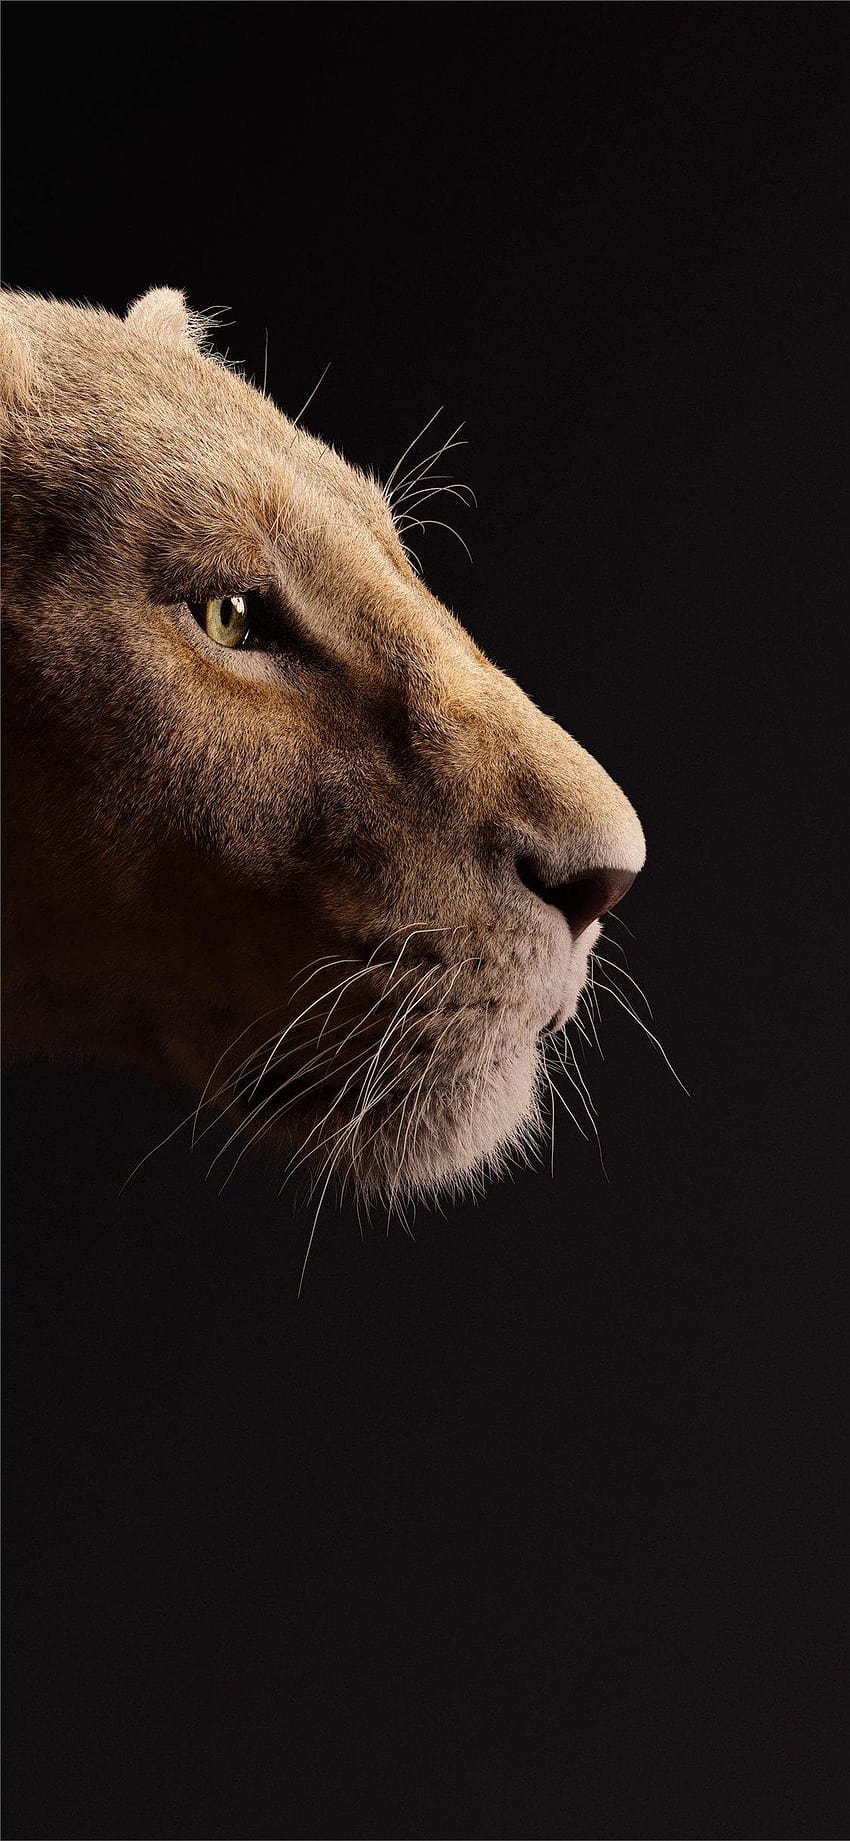 beyonce as nala the lion king 2019 iPhone X HD phone wallpaper